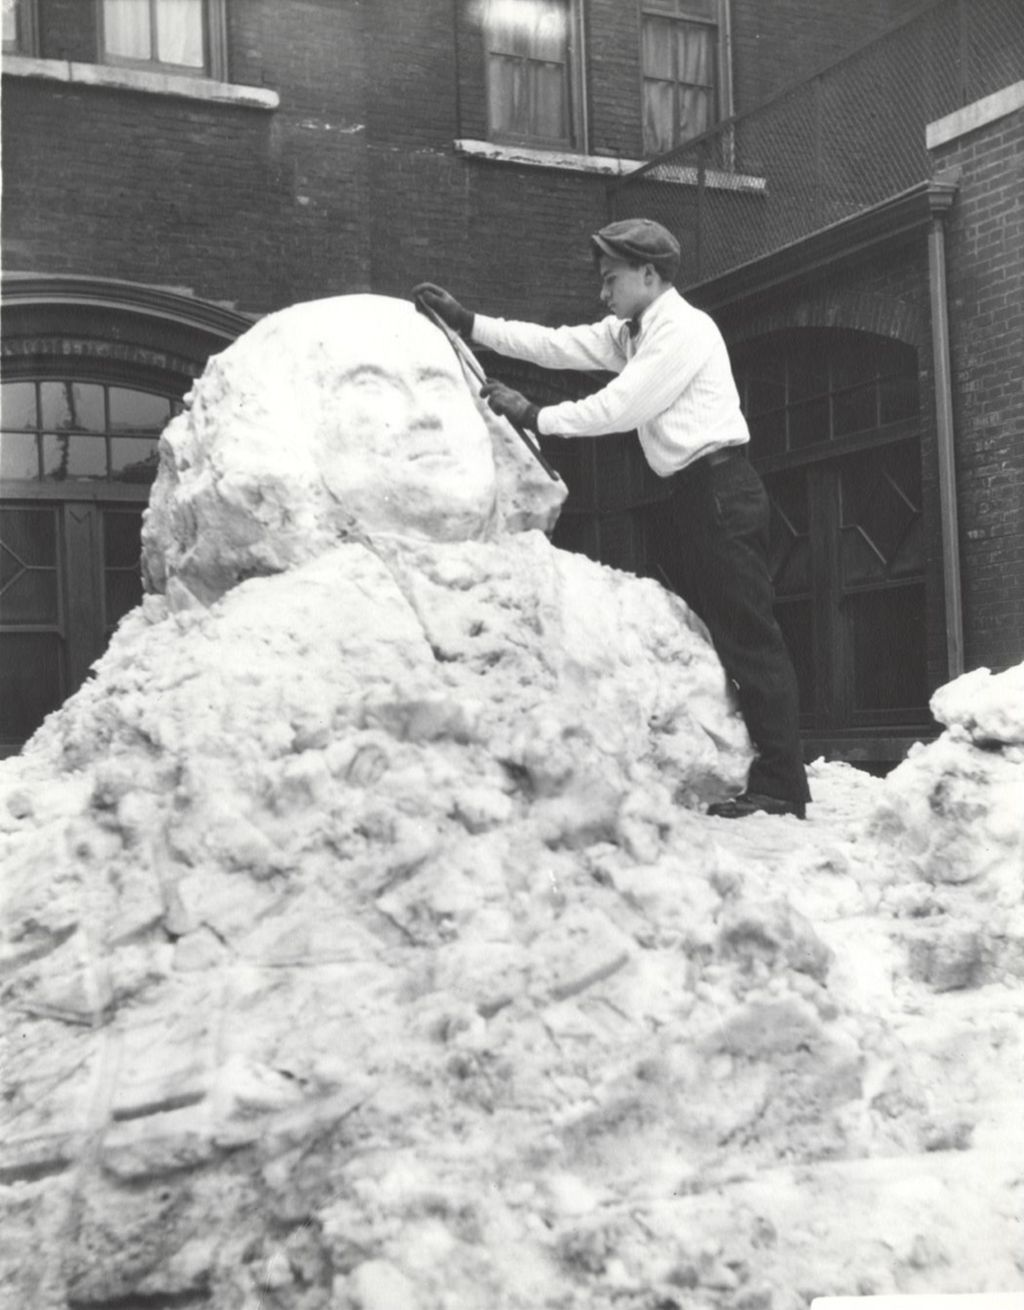 Young man creating snow sculpture